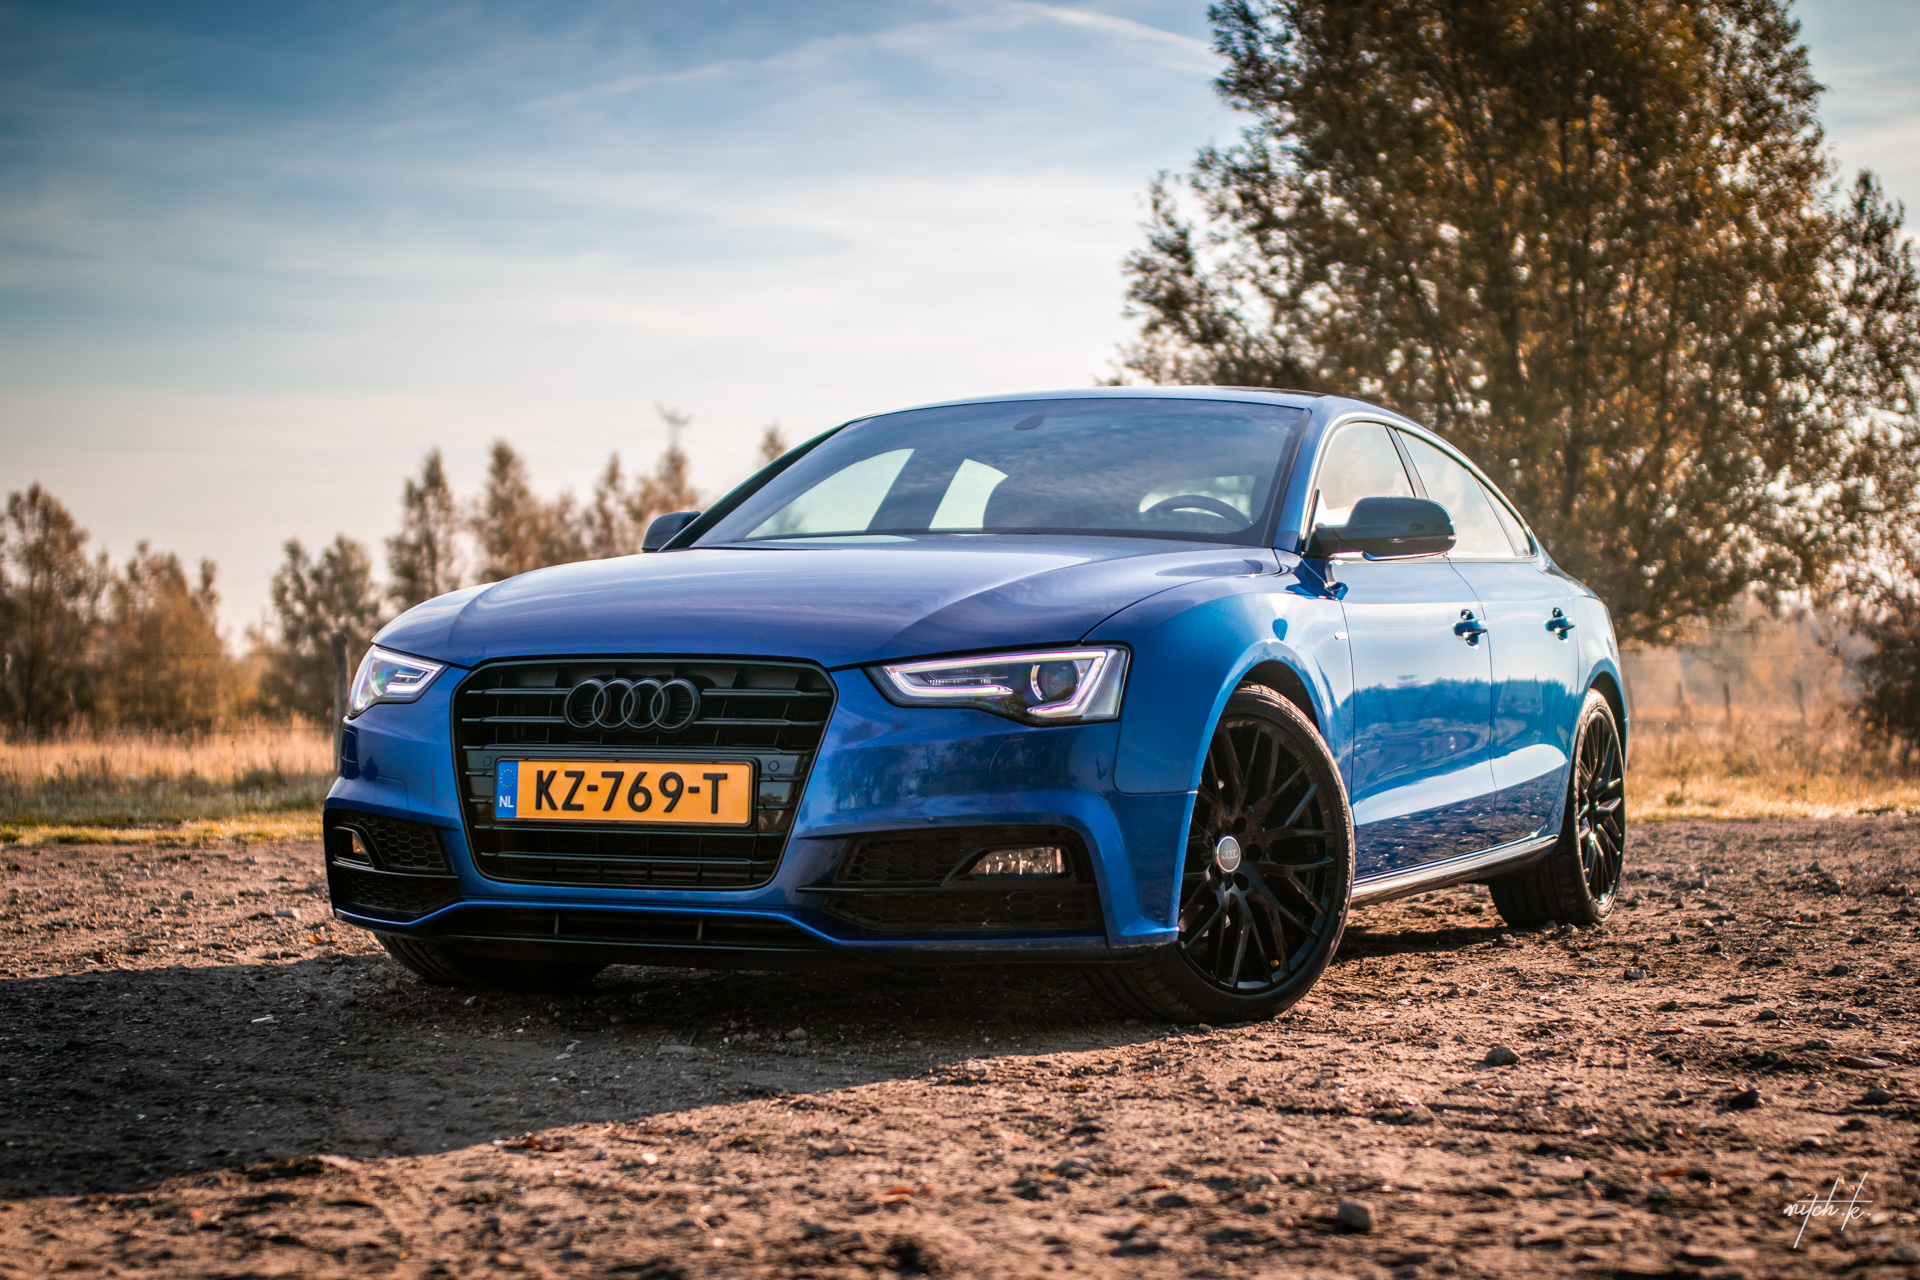 Audi_A5_Sline_TSFI_blue-001.jpg